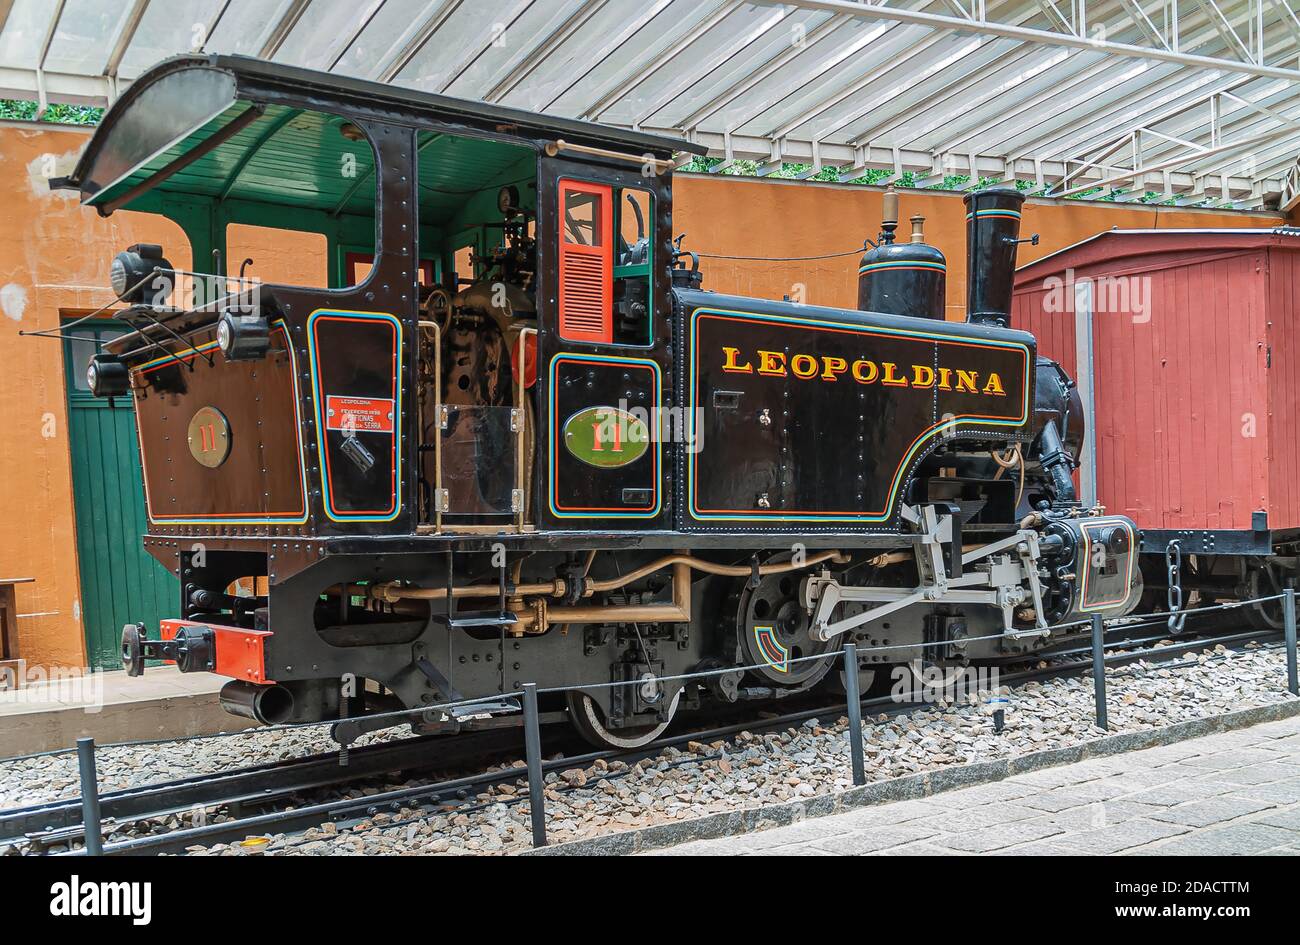 Petropolis, Brazil - December 23, 2008: closeup of black historic train locomotive named Leopoldina in Imperial Museum. Stock Photo